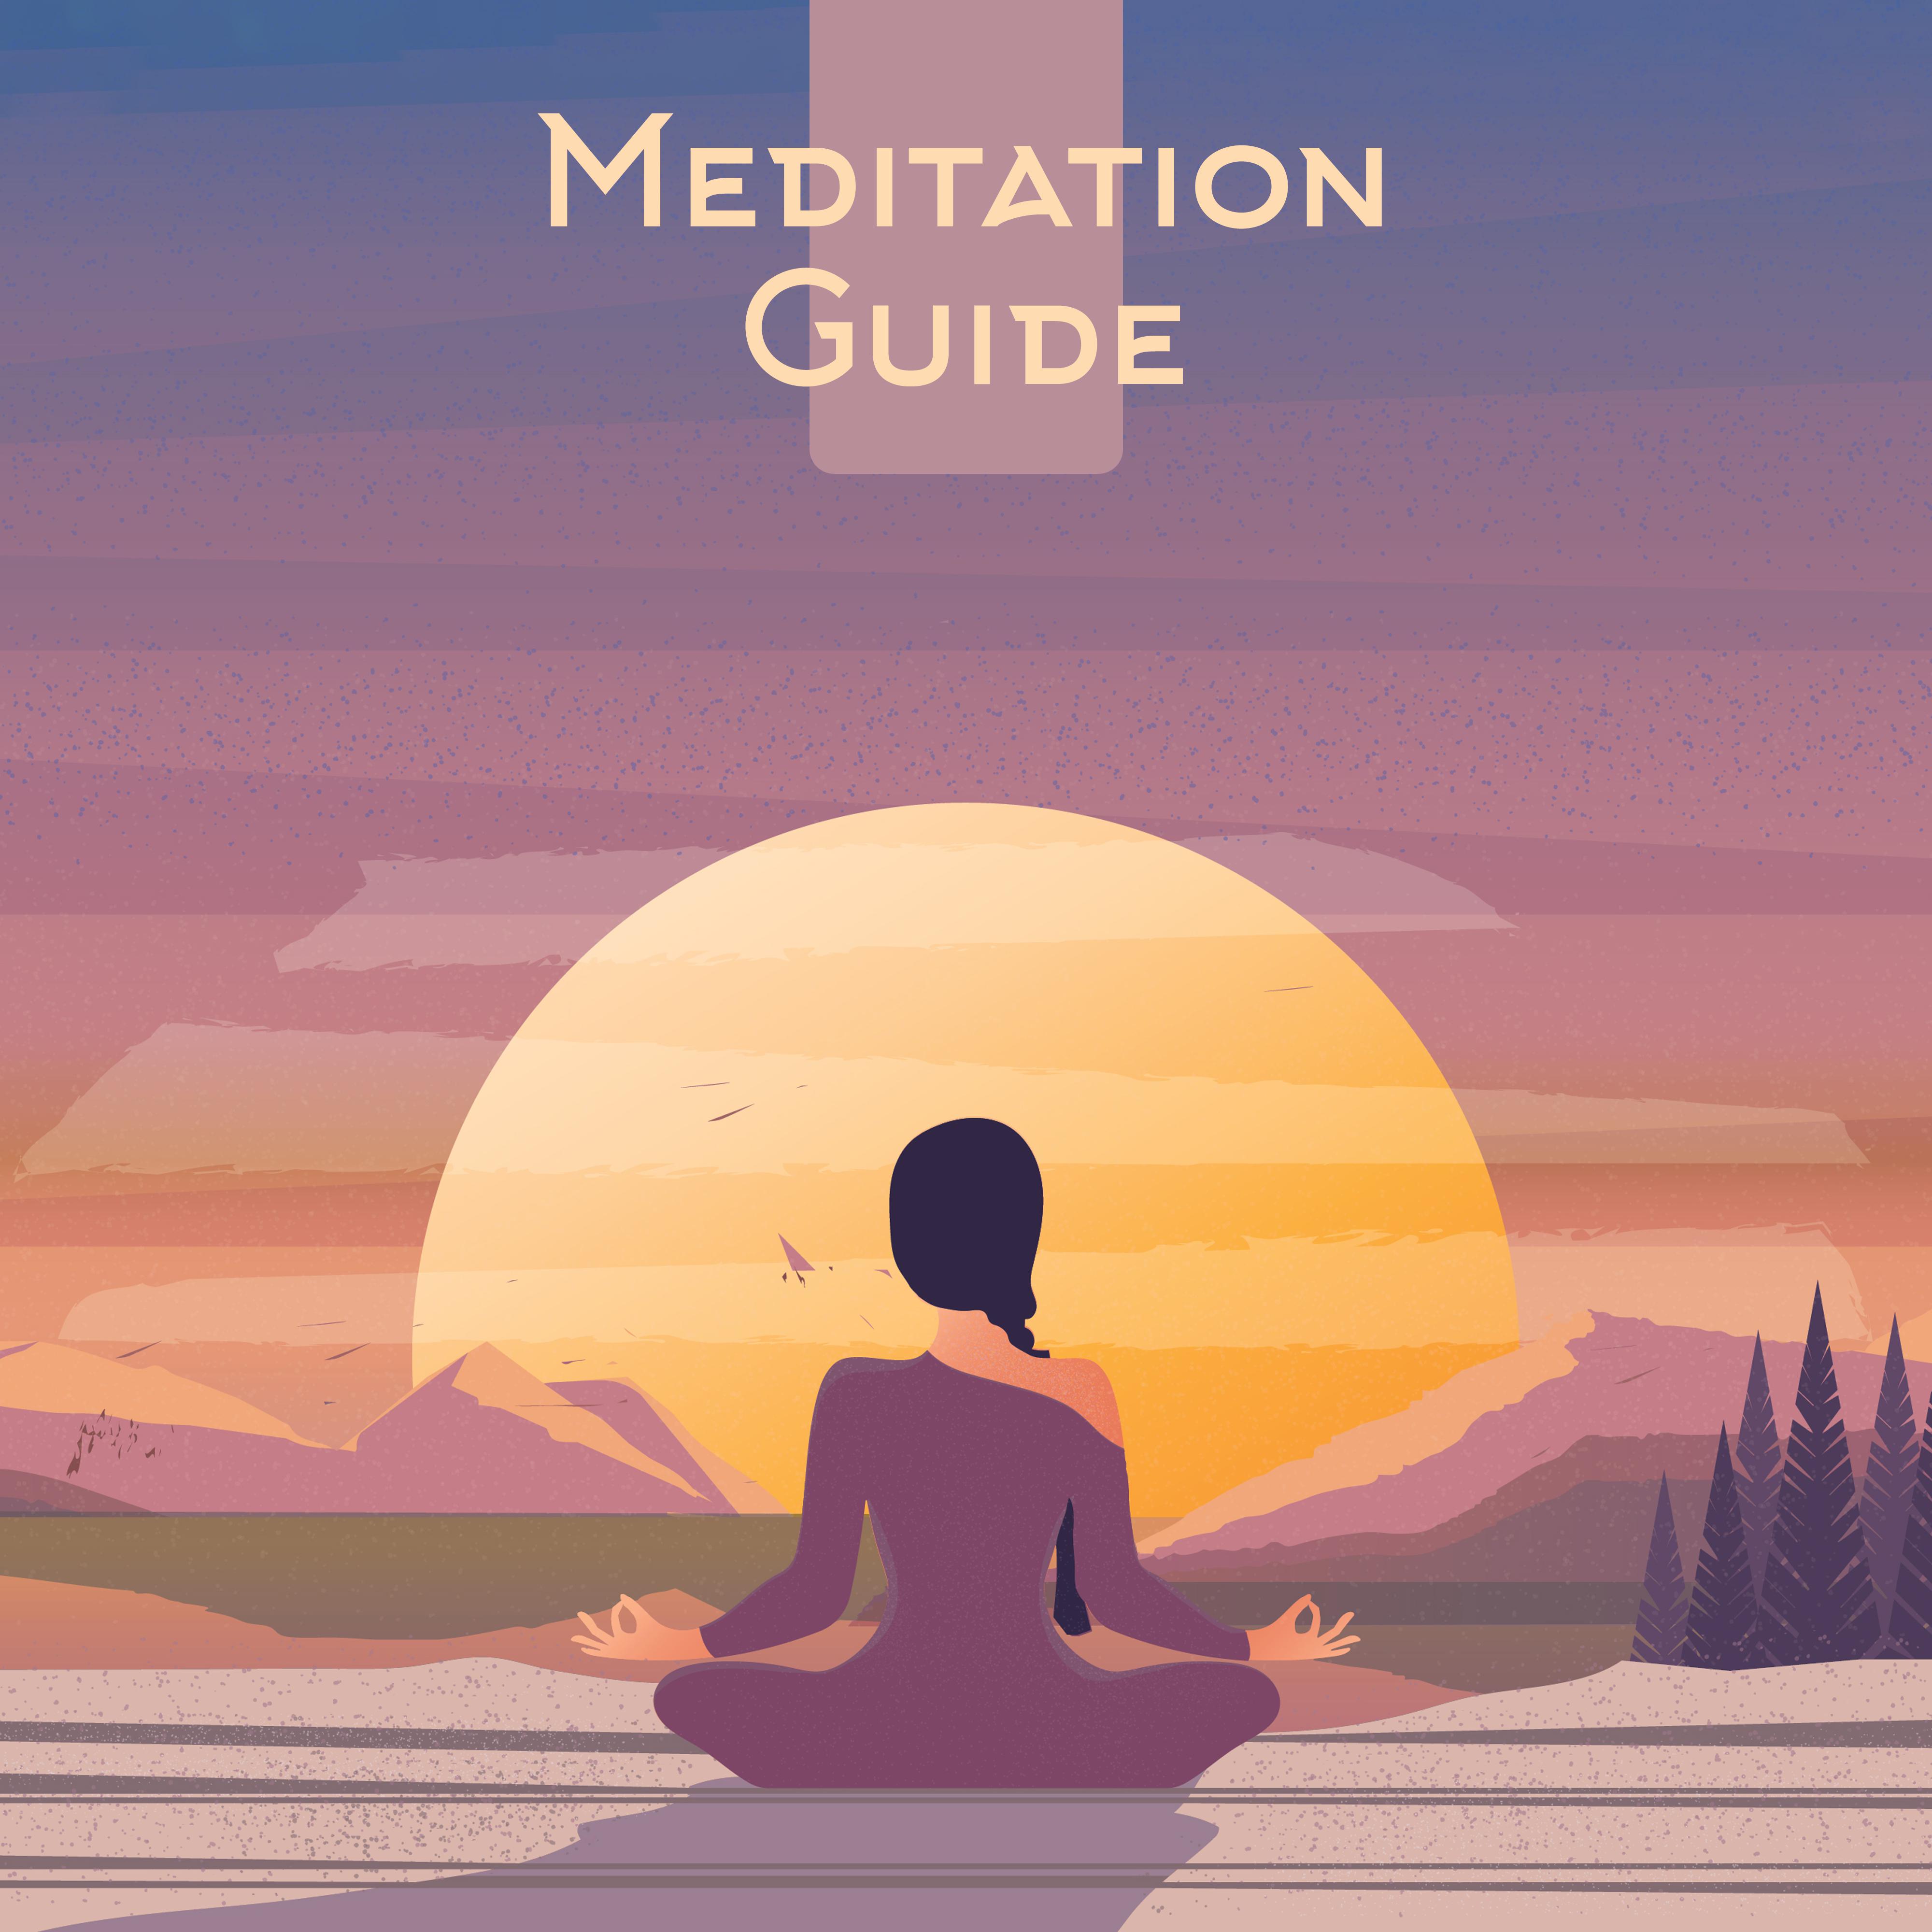 Meditation Guide - Universal Meditation Music for All Meditation and Yoga Exercises